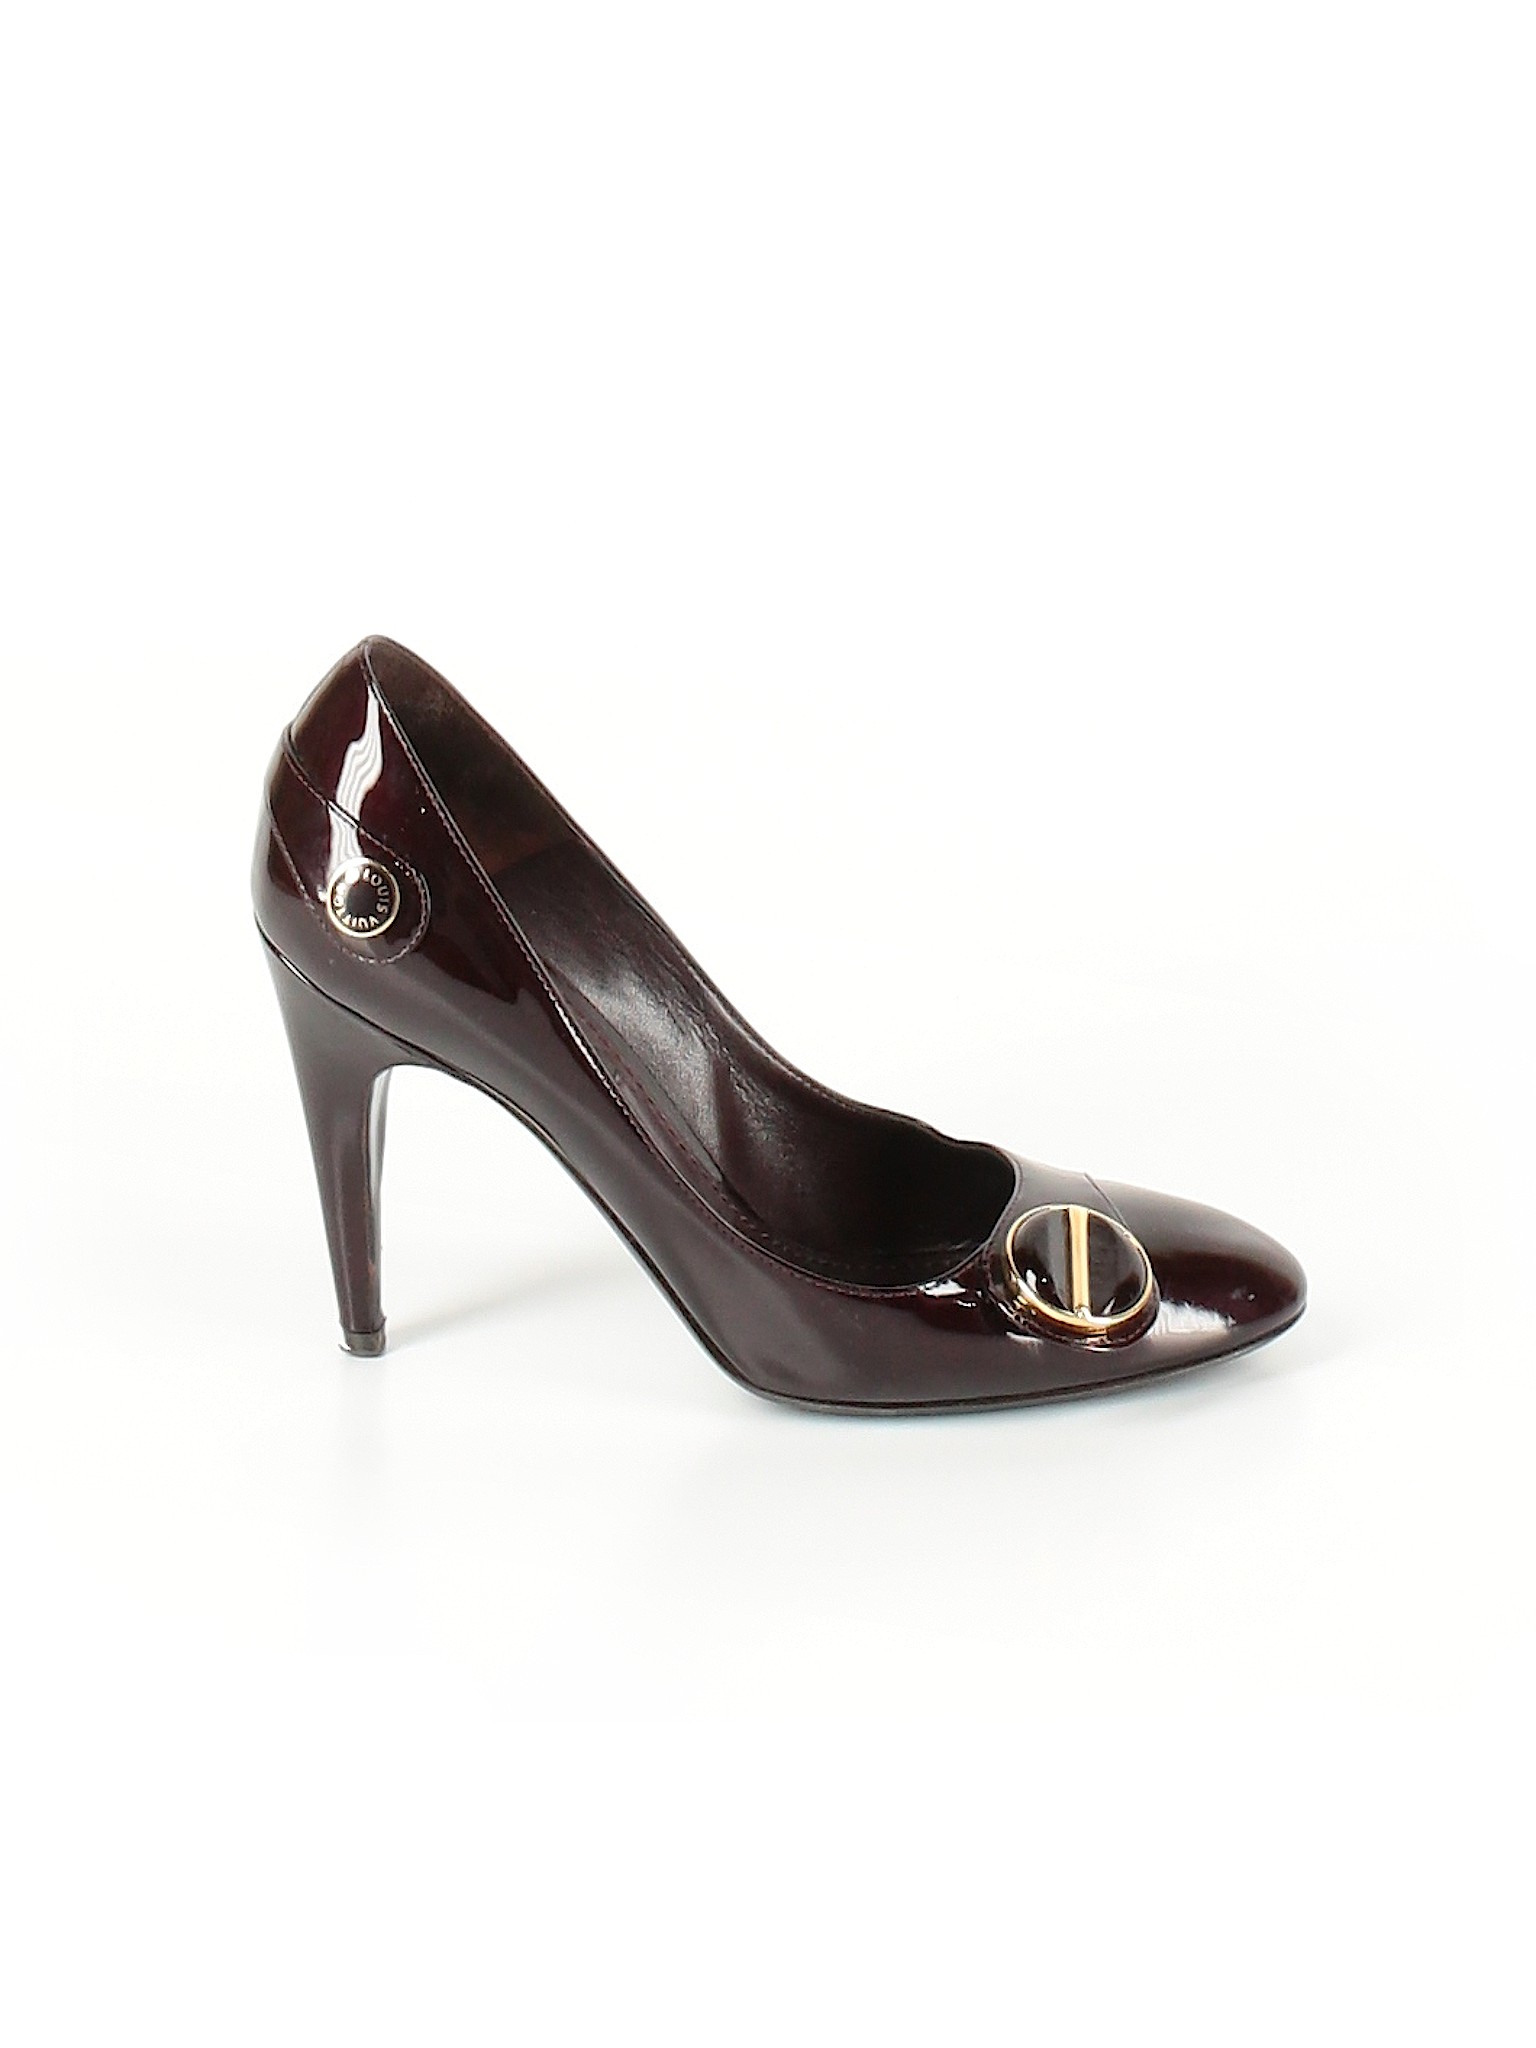 Louis Vuitton Solid Burgundy Heels Size 36 (EU) - 83% off | thredUP